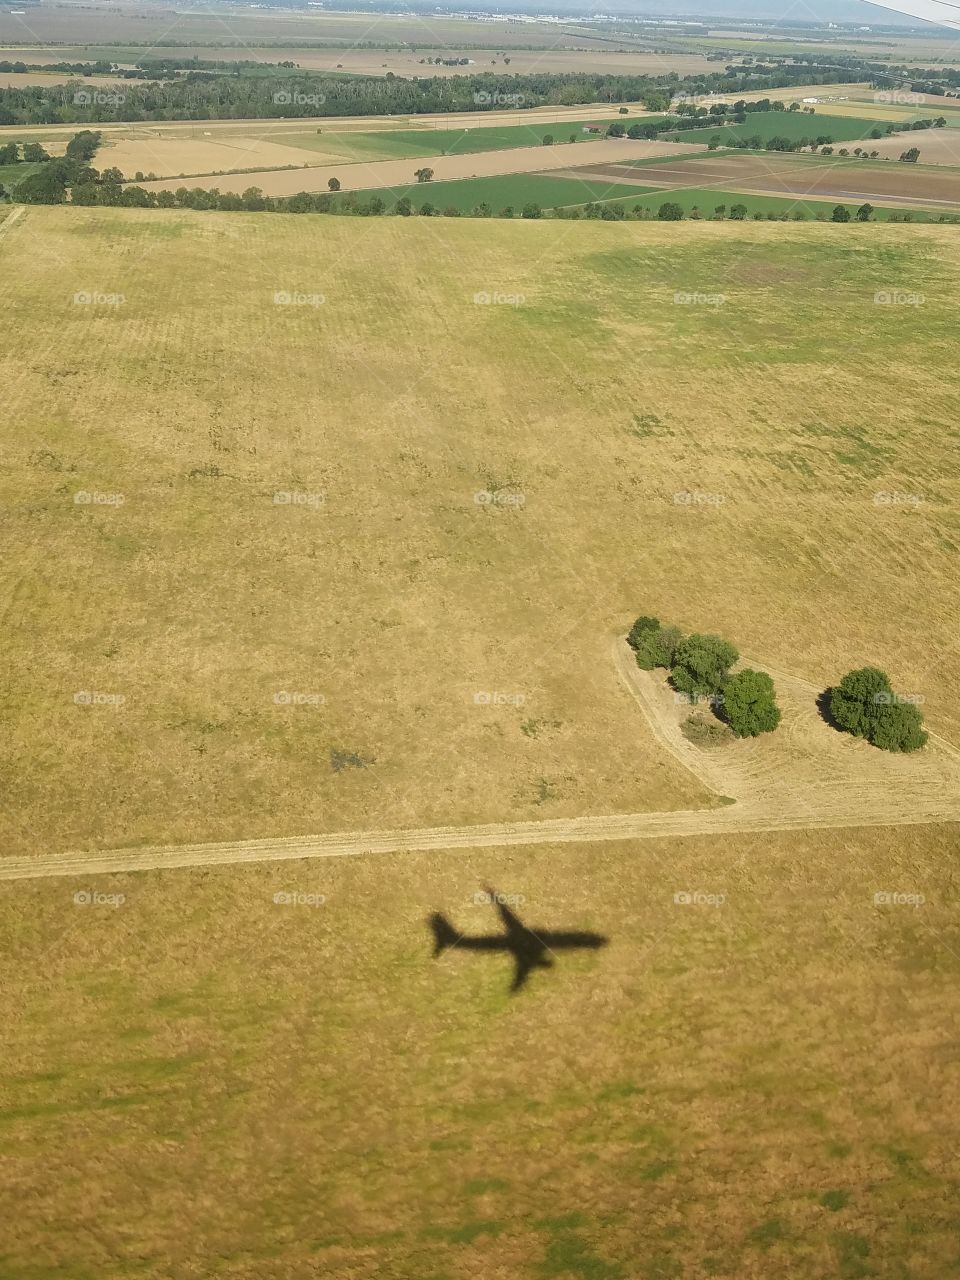 Airplane shadow on land